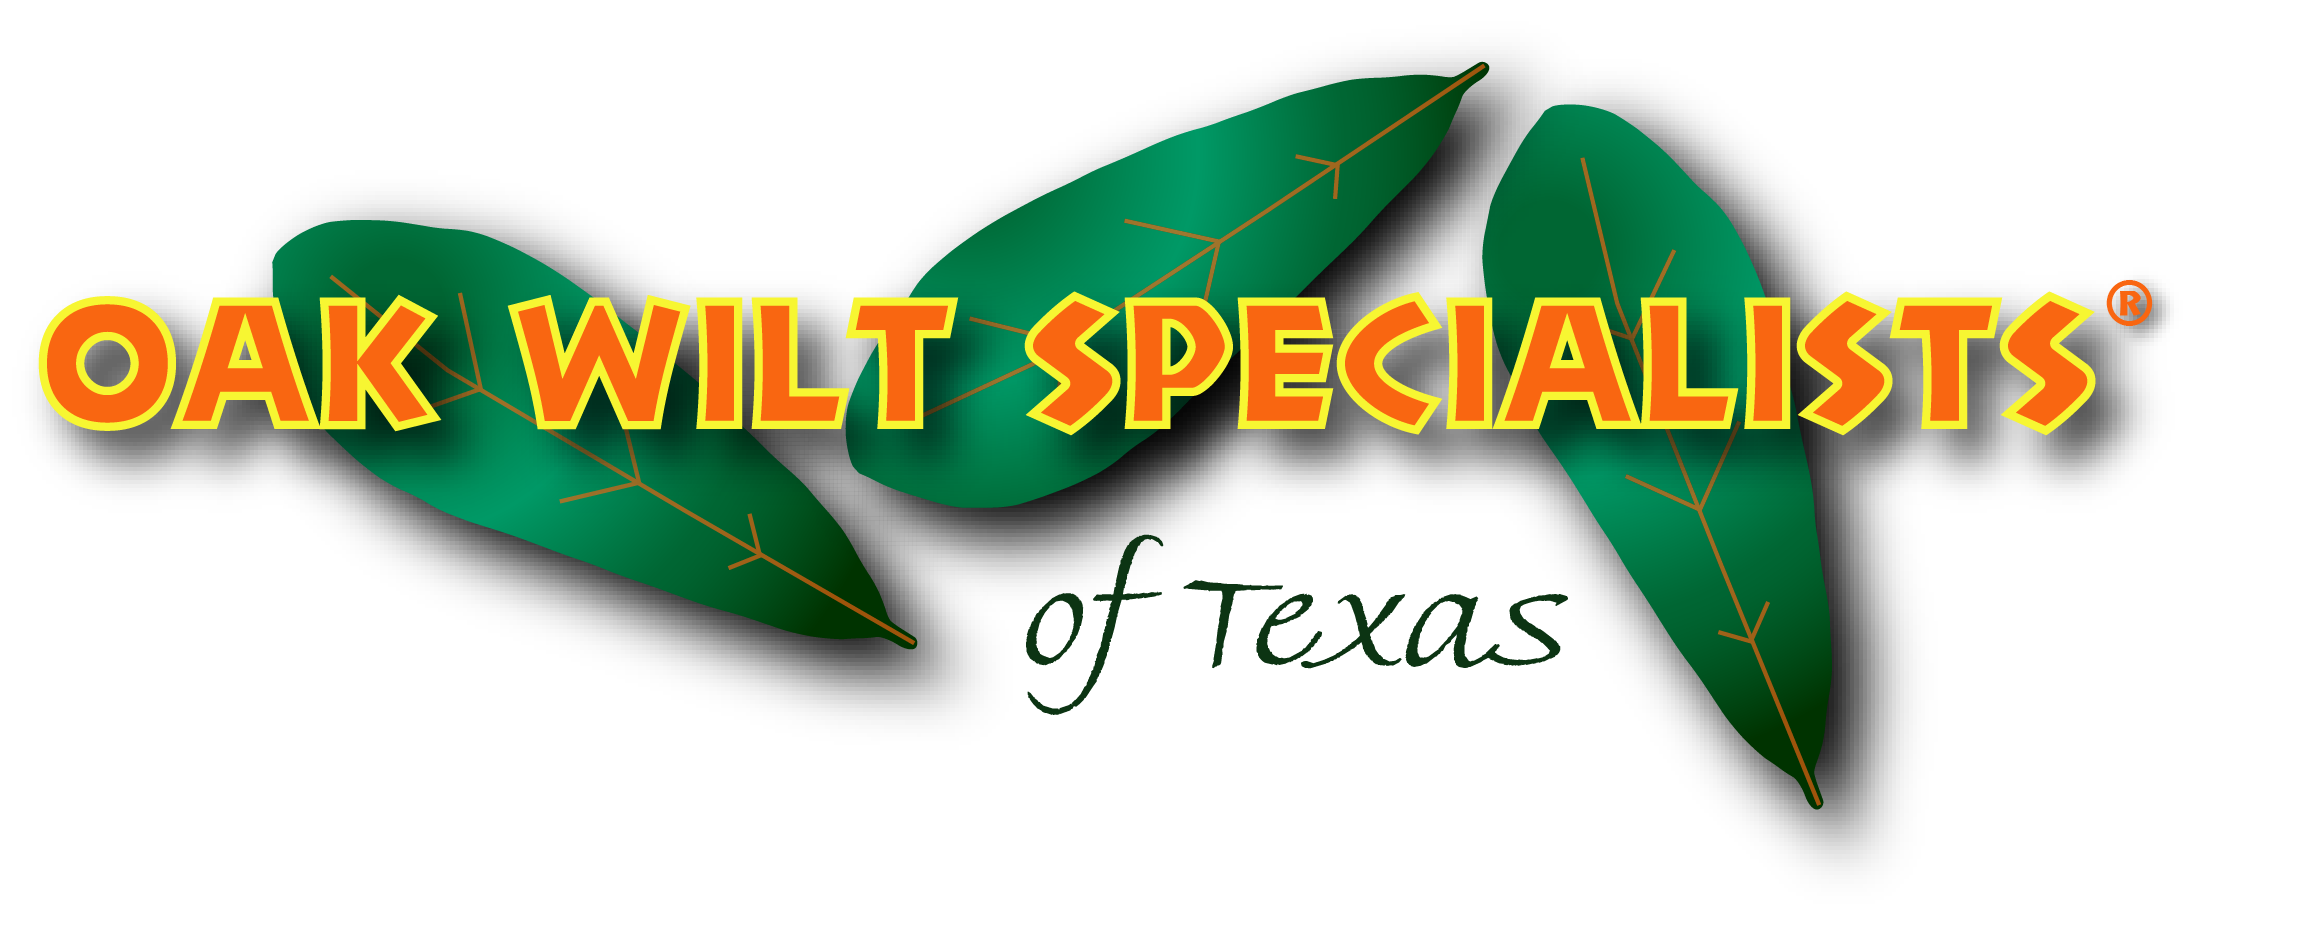 Oak Wilt Specialists of Texas log